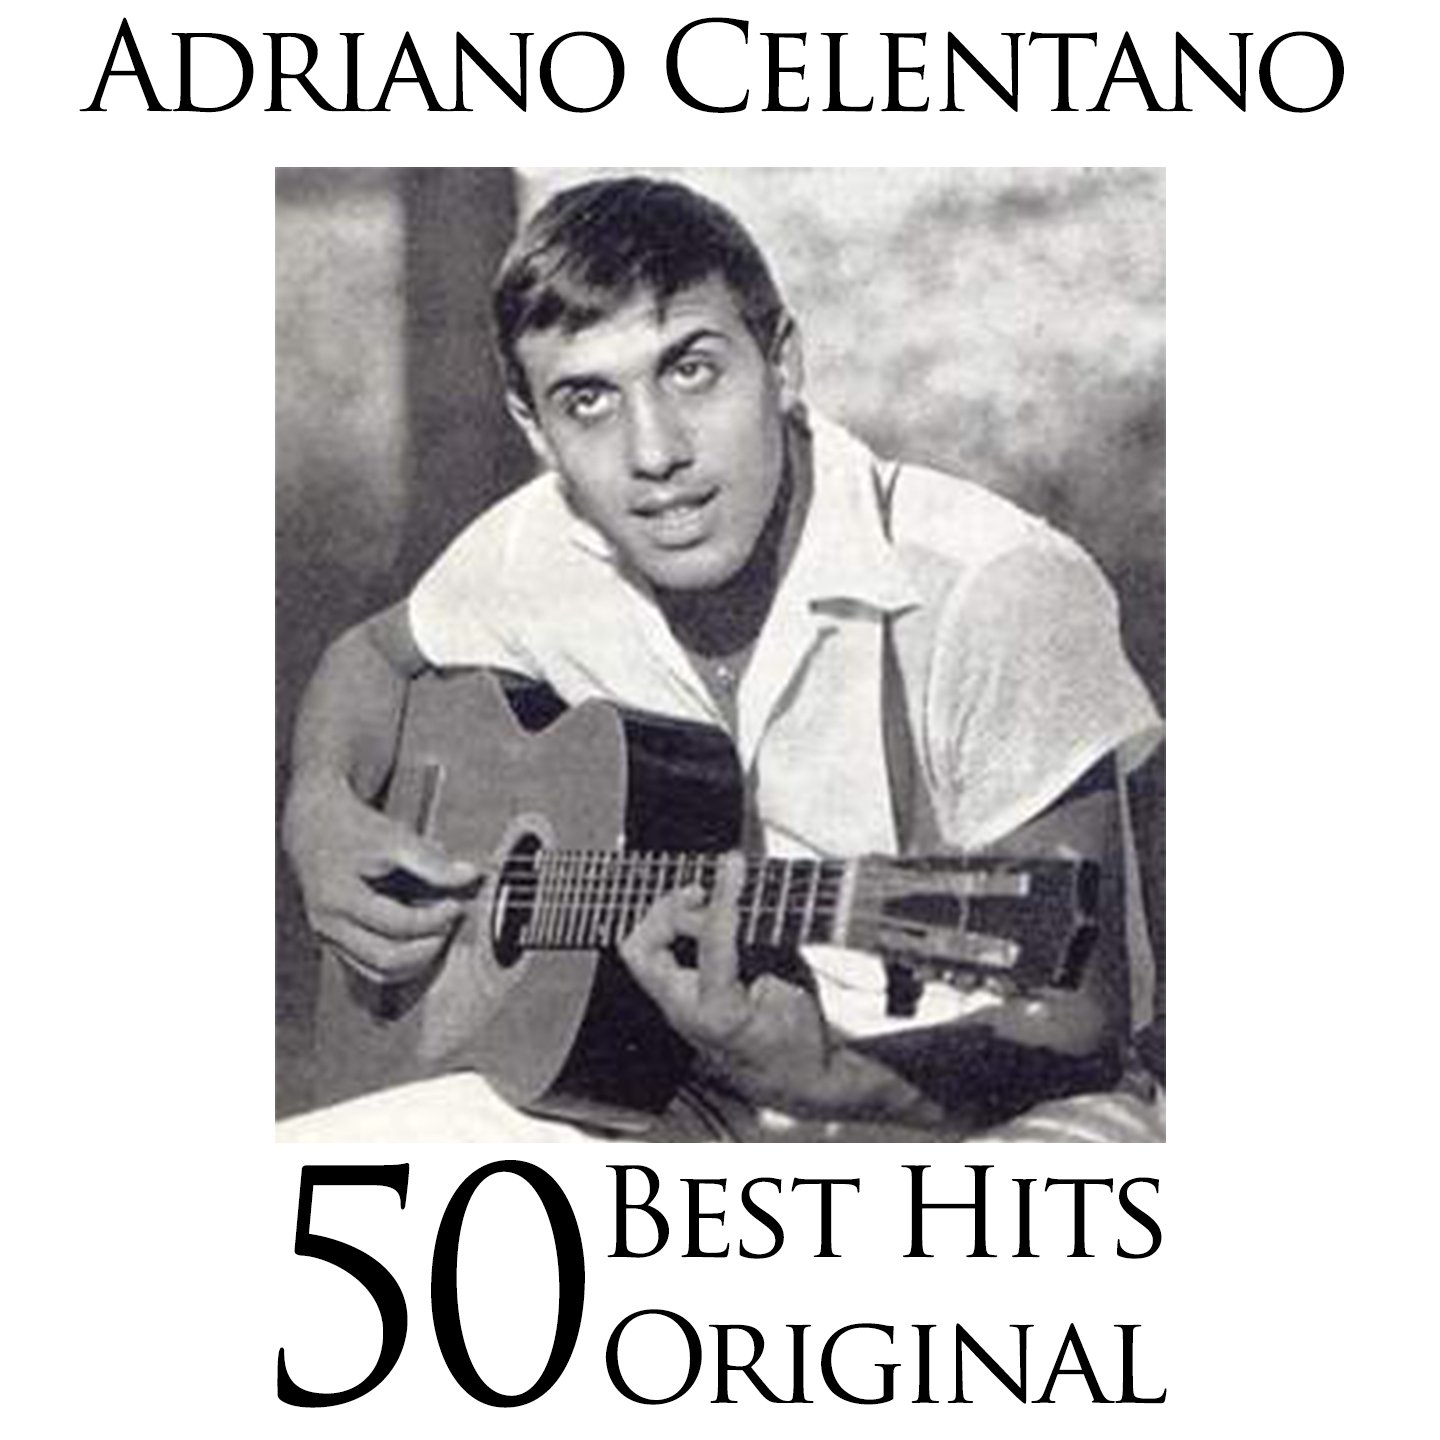 Adriano Celentano 50 Best Hits Original — Adriano Celentano | Last.fm